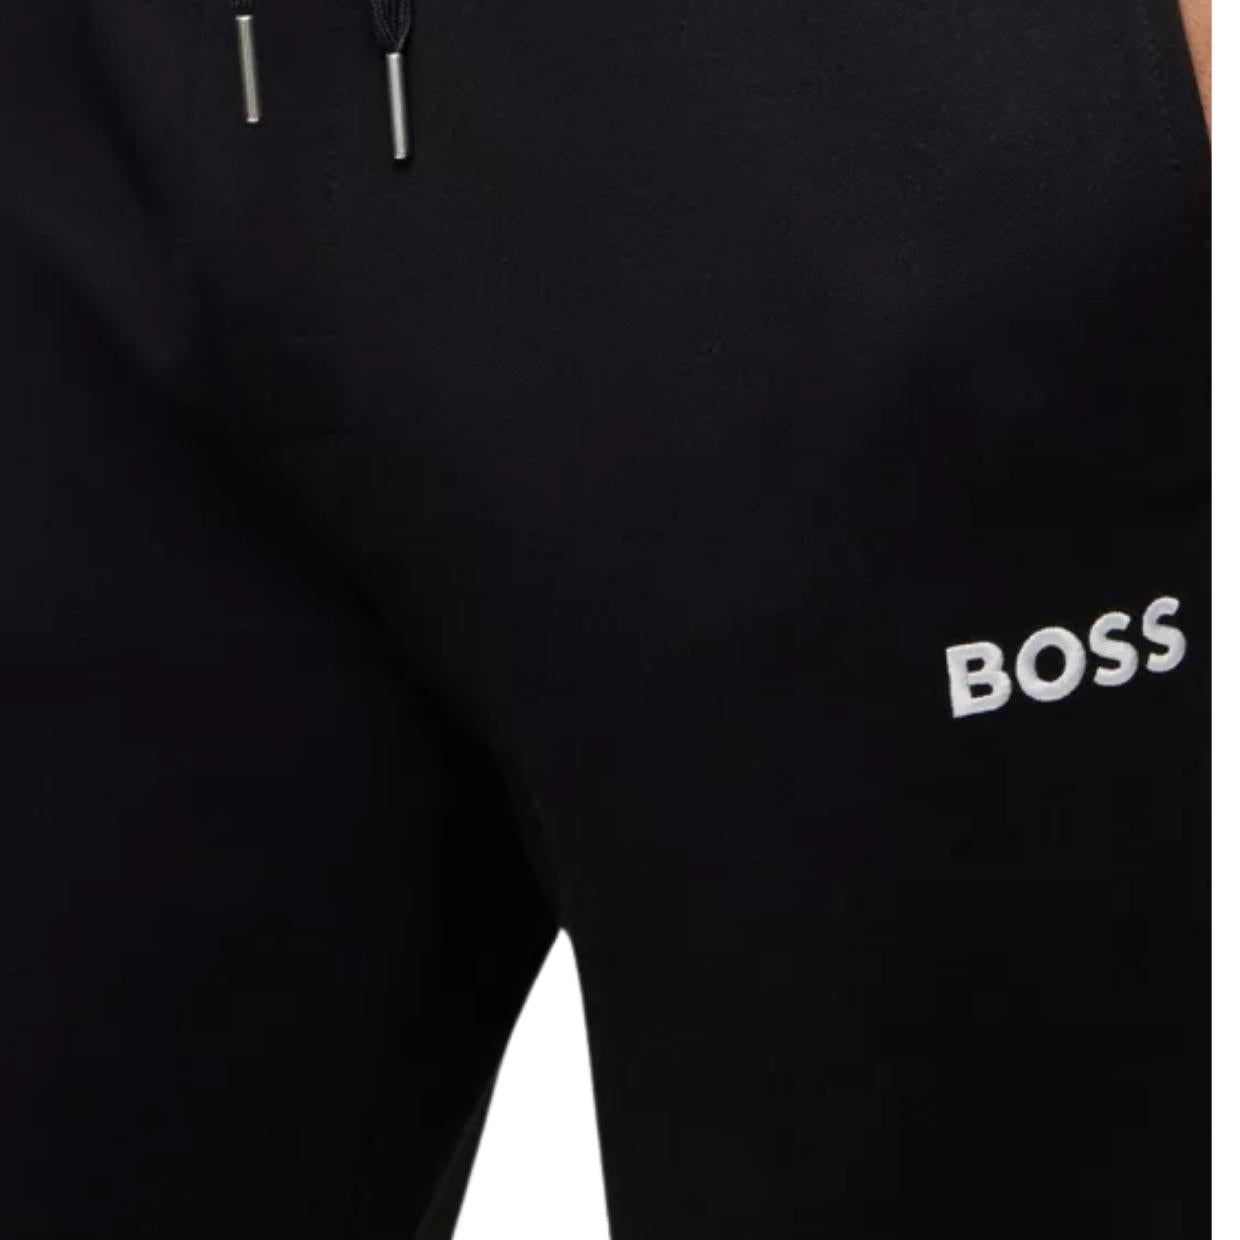 BOSS Logo Embroidered Black Tracksuit Jogging Bottoms